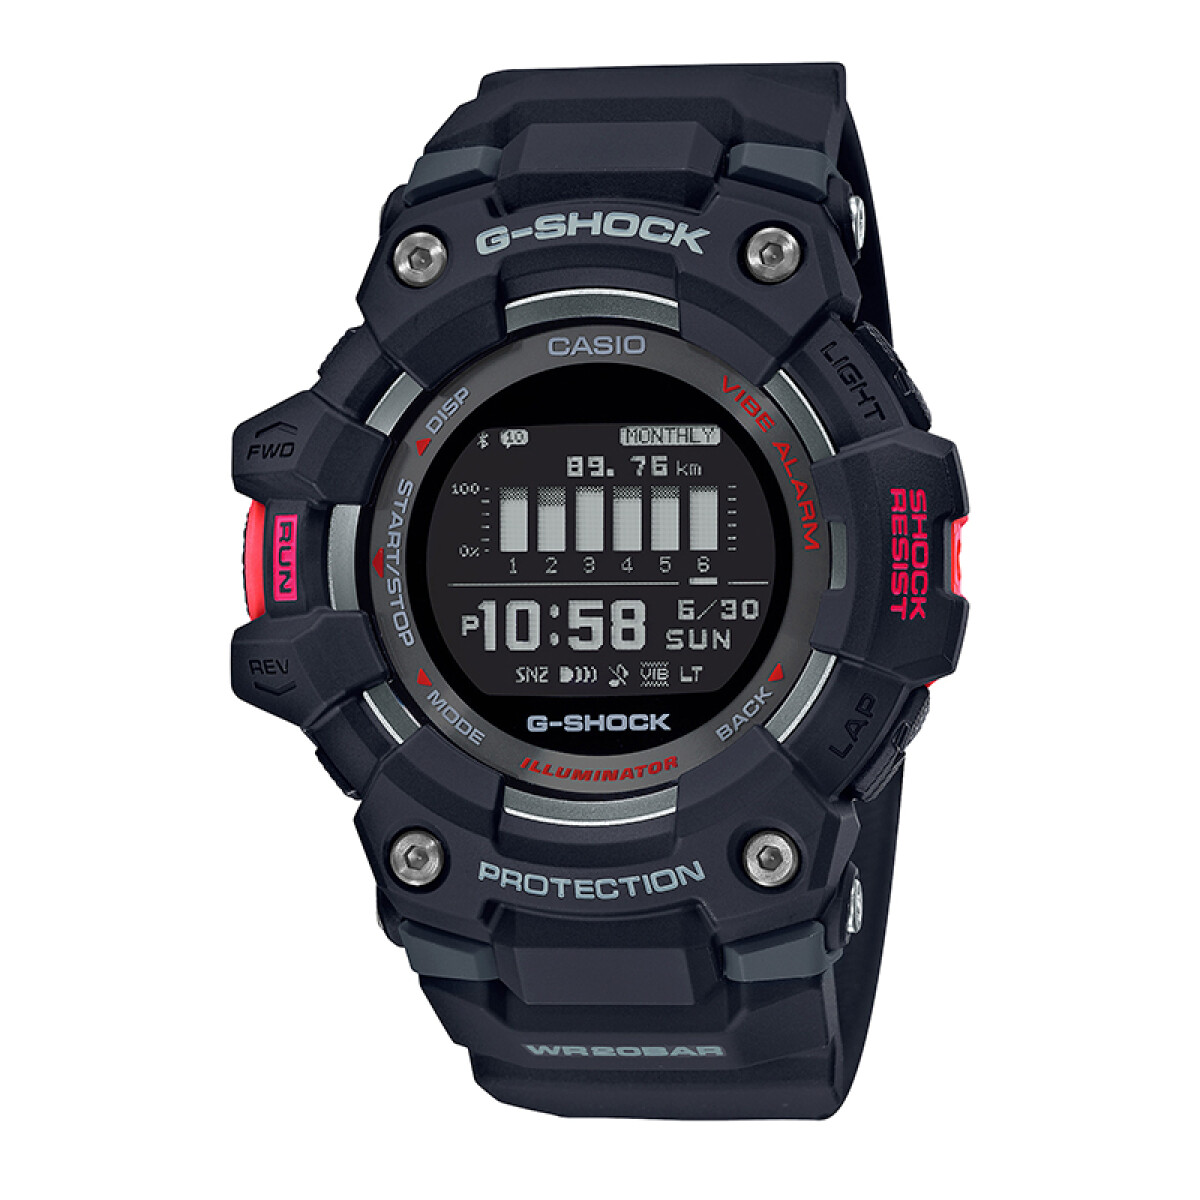 Reloj G-Shock deportivo de resina - negro y rojo 